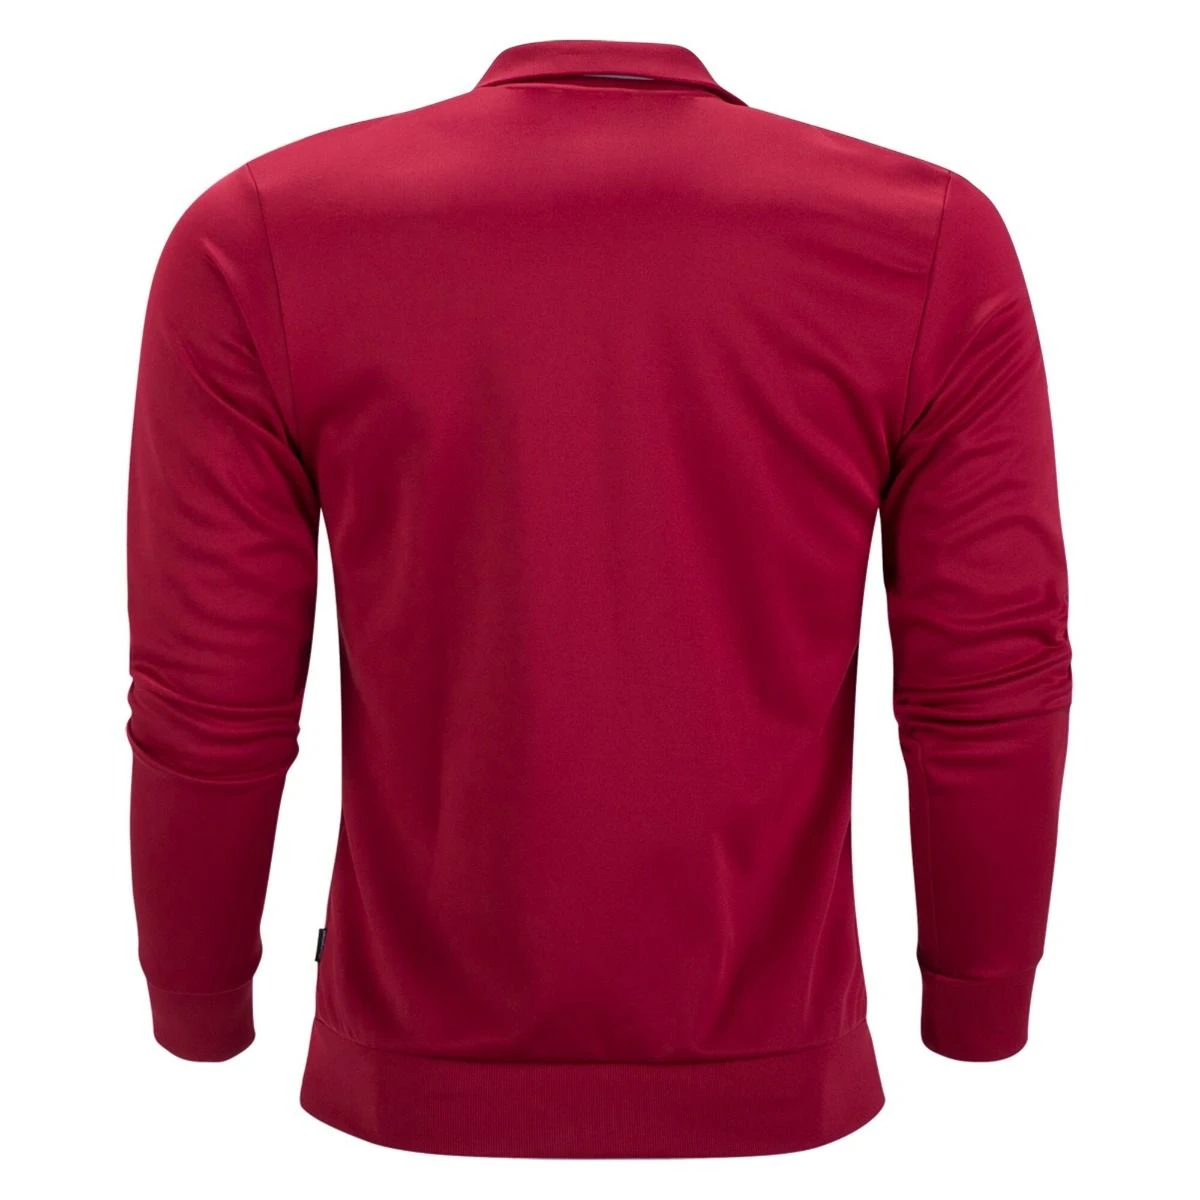 Adidas Men's Arsenal FC 3-Stripes Track Jacket - Burgundy